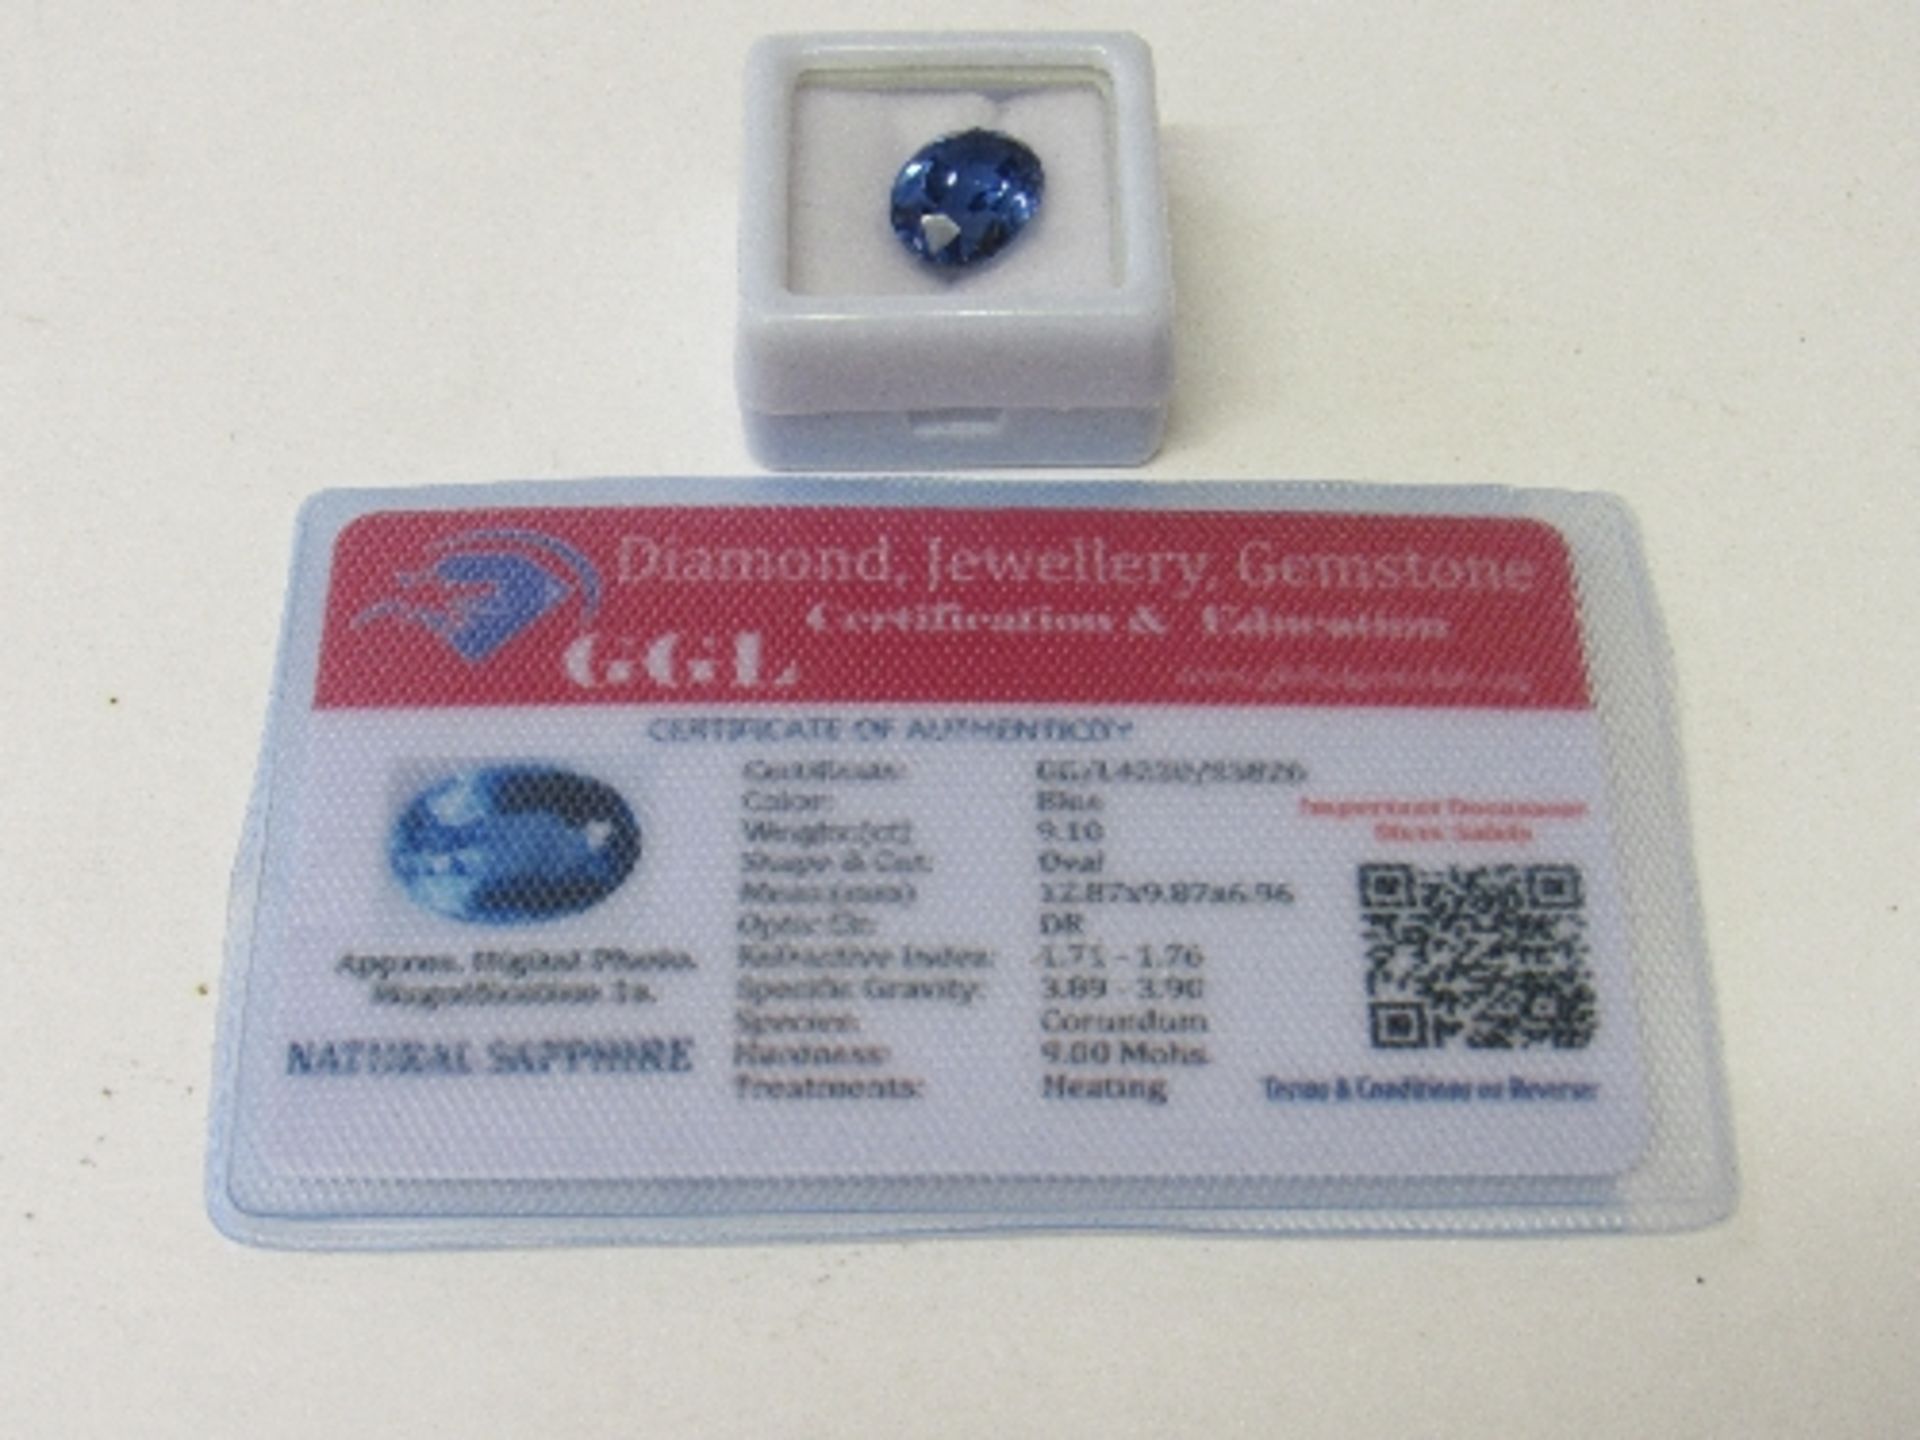 Natural blue oval cut sapphire, wt 9.1 carat, with certificate. Estimate £50-70.